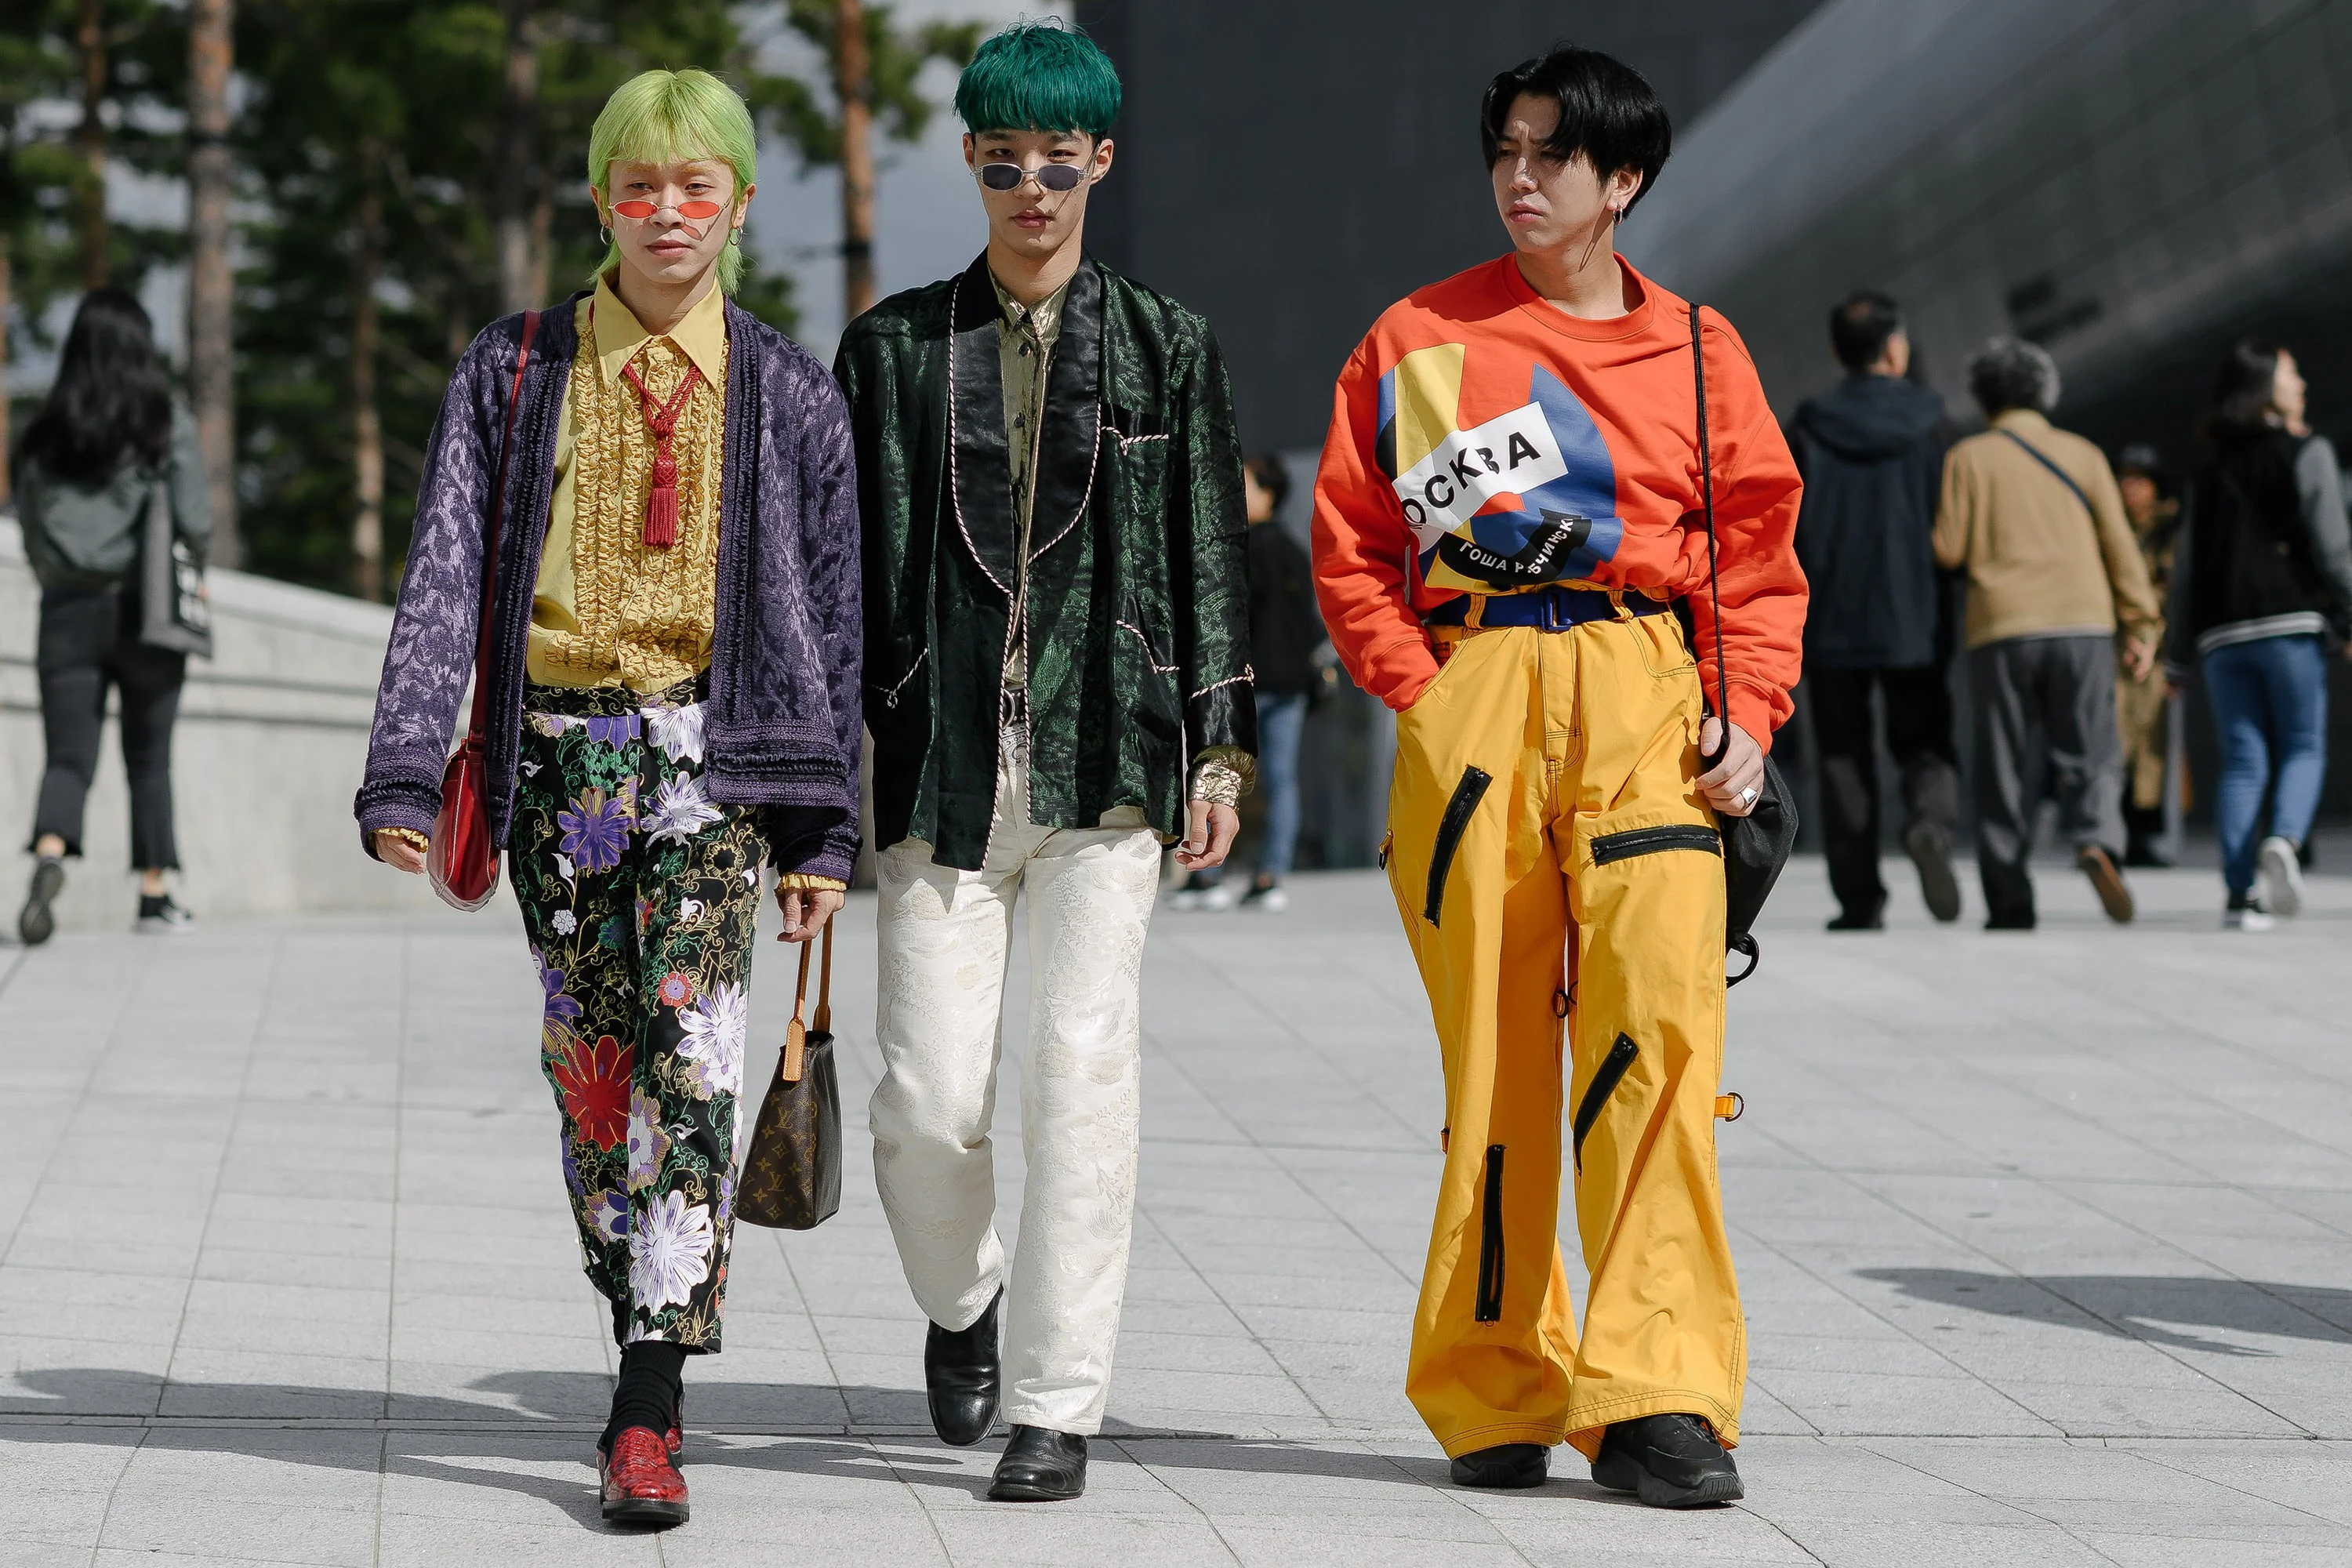 Seoul Fashion Week Cancelled Due to Coronavirus Fears